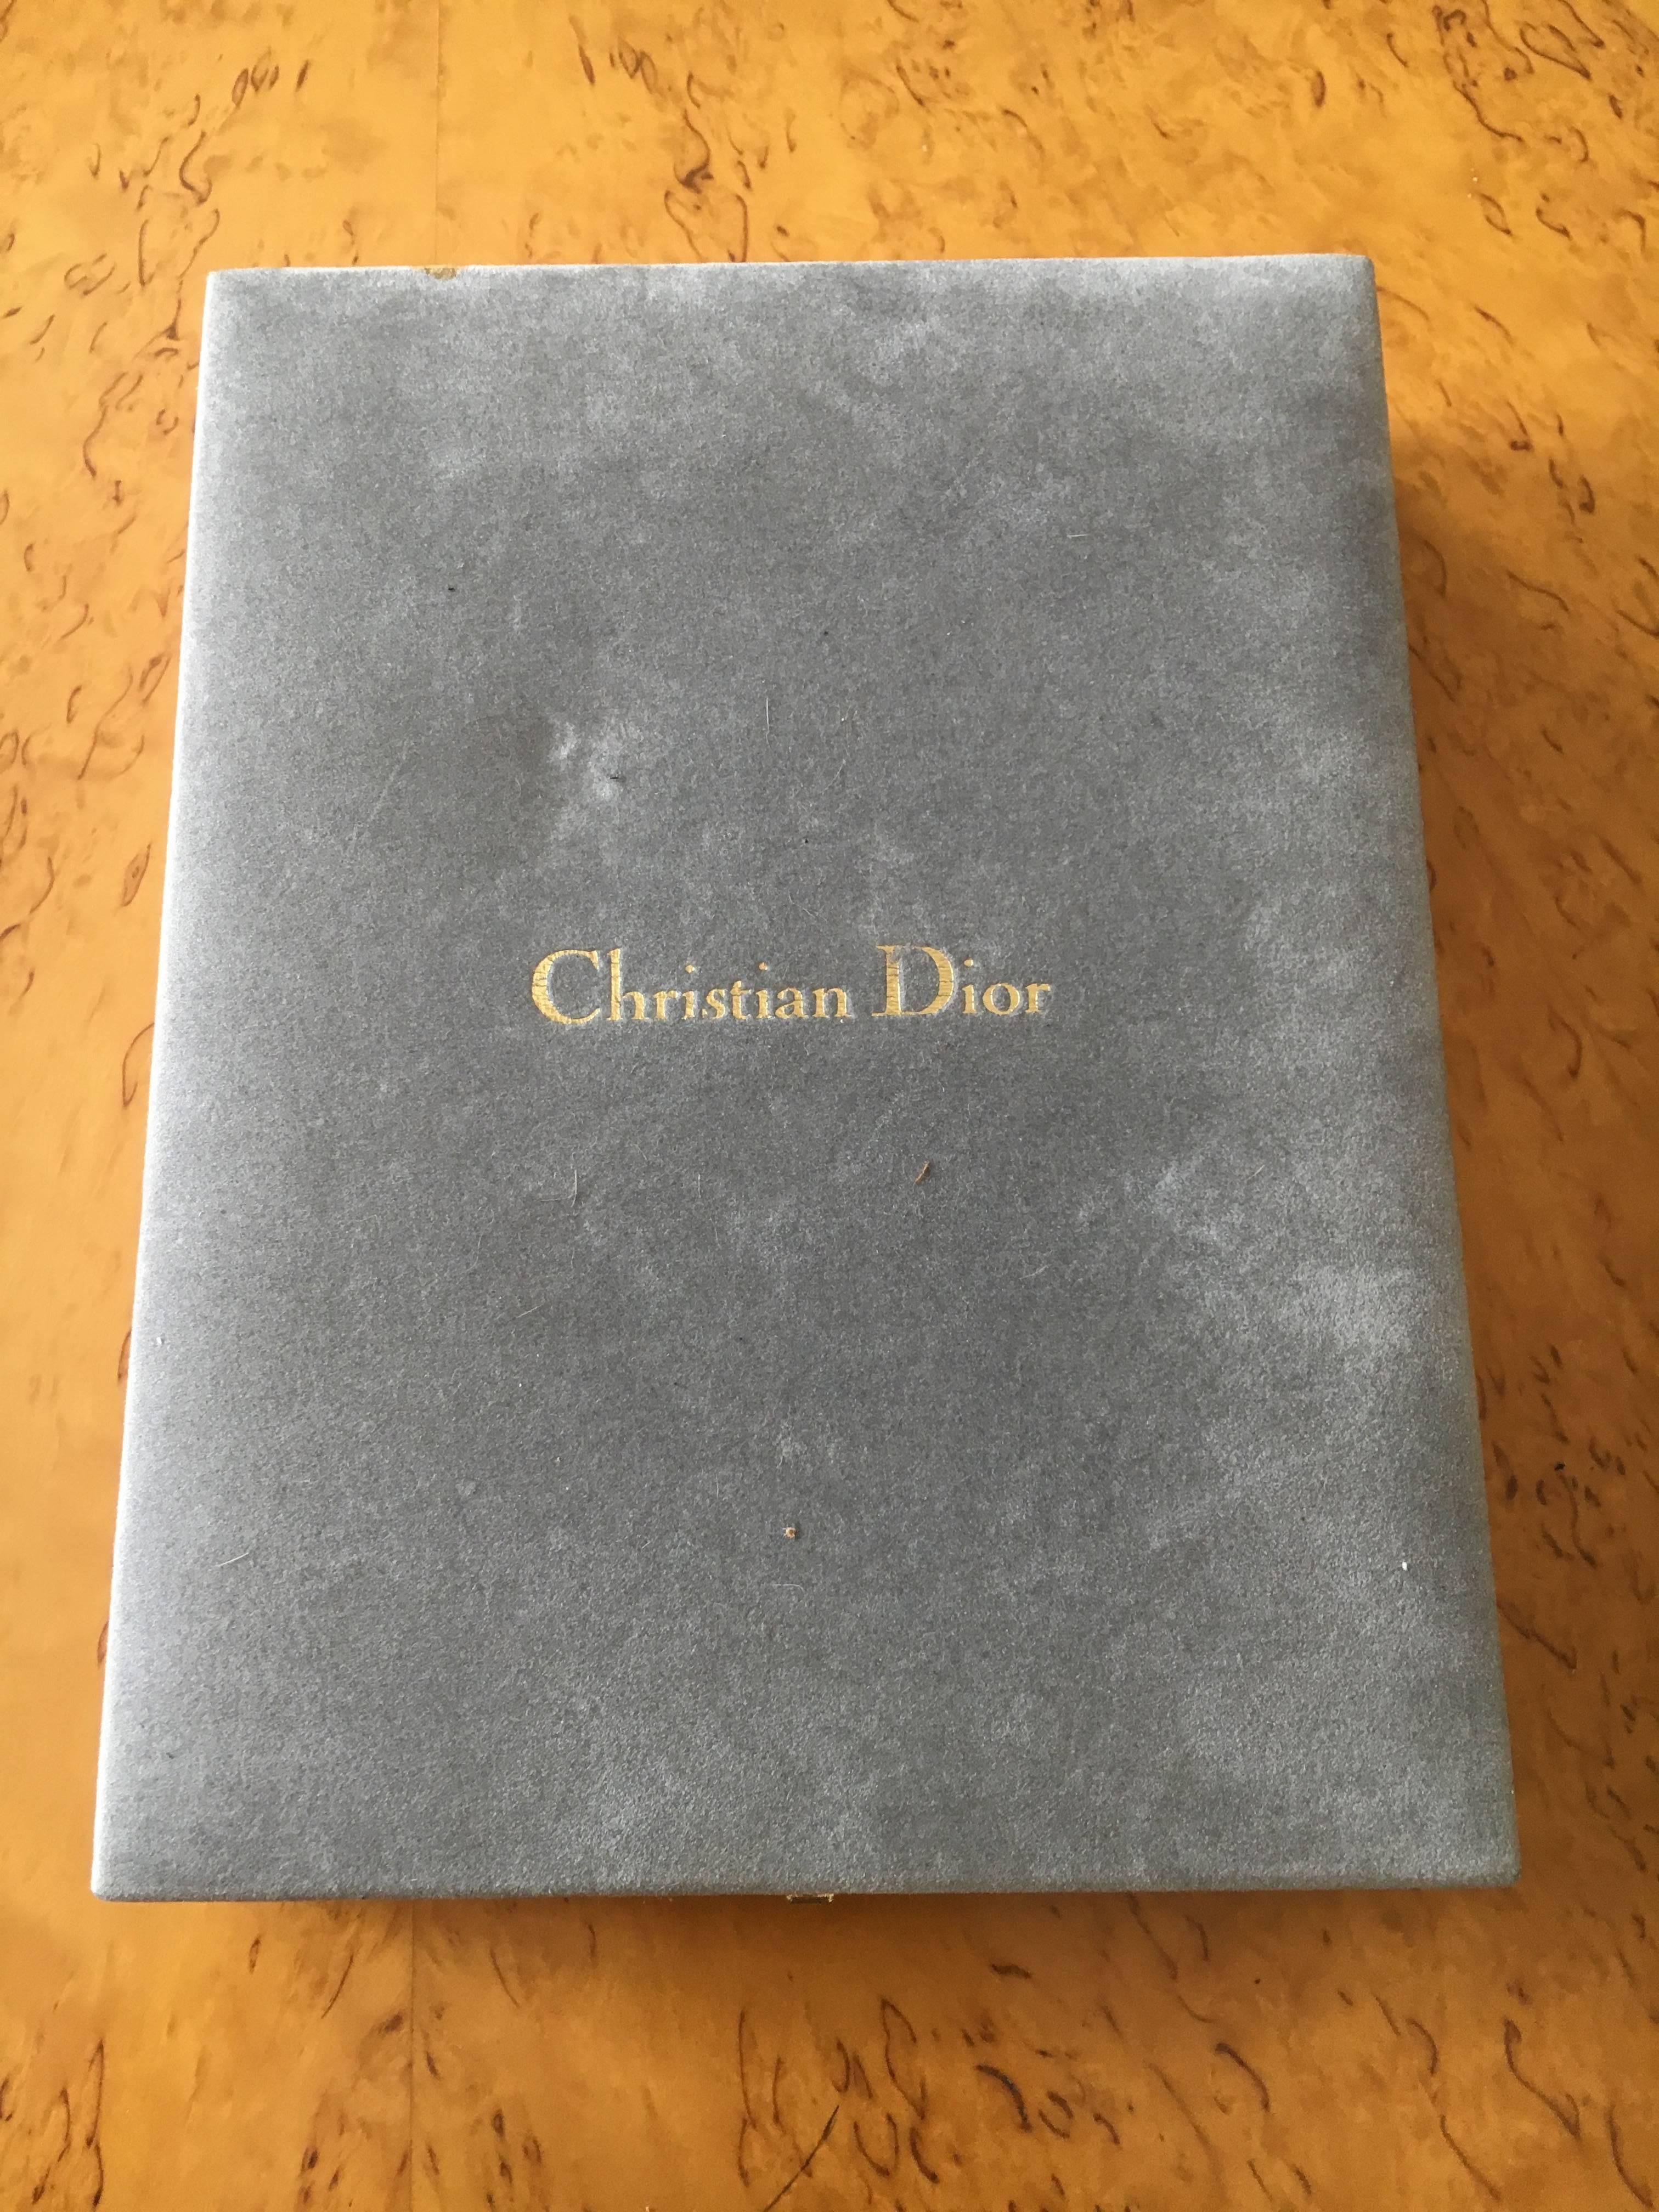  Christian Dior by John Galliano Multi Strand Bronze "Massai " Choker Necklace.
In original Dior box.